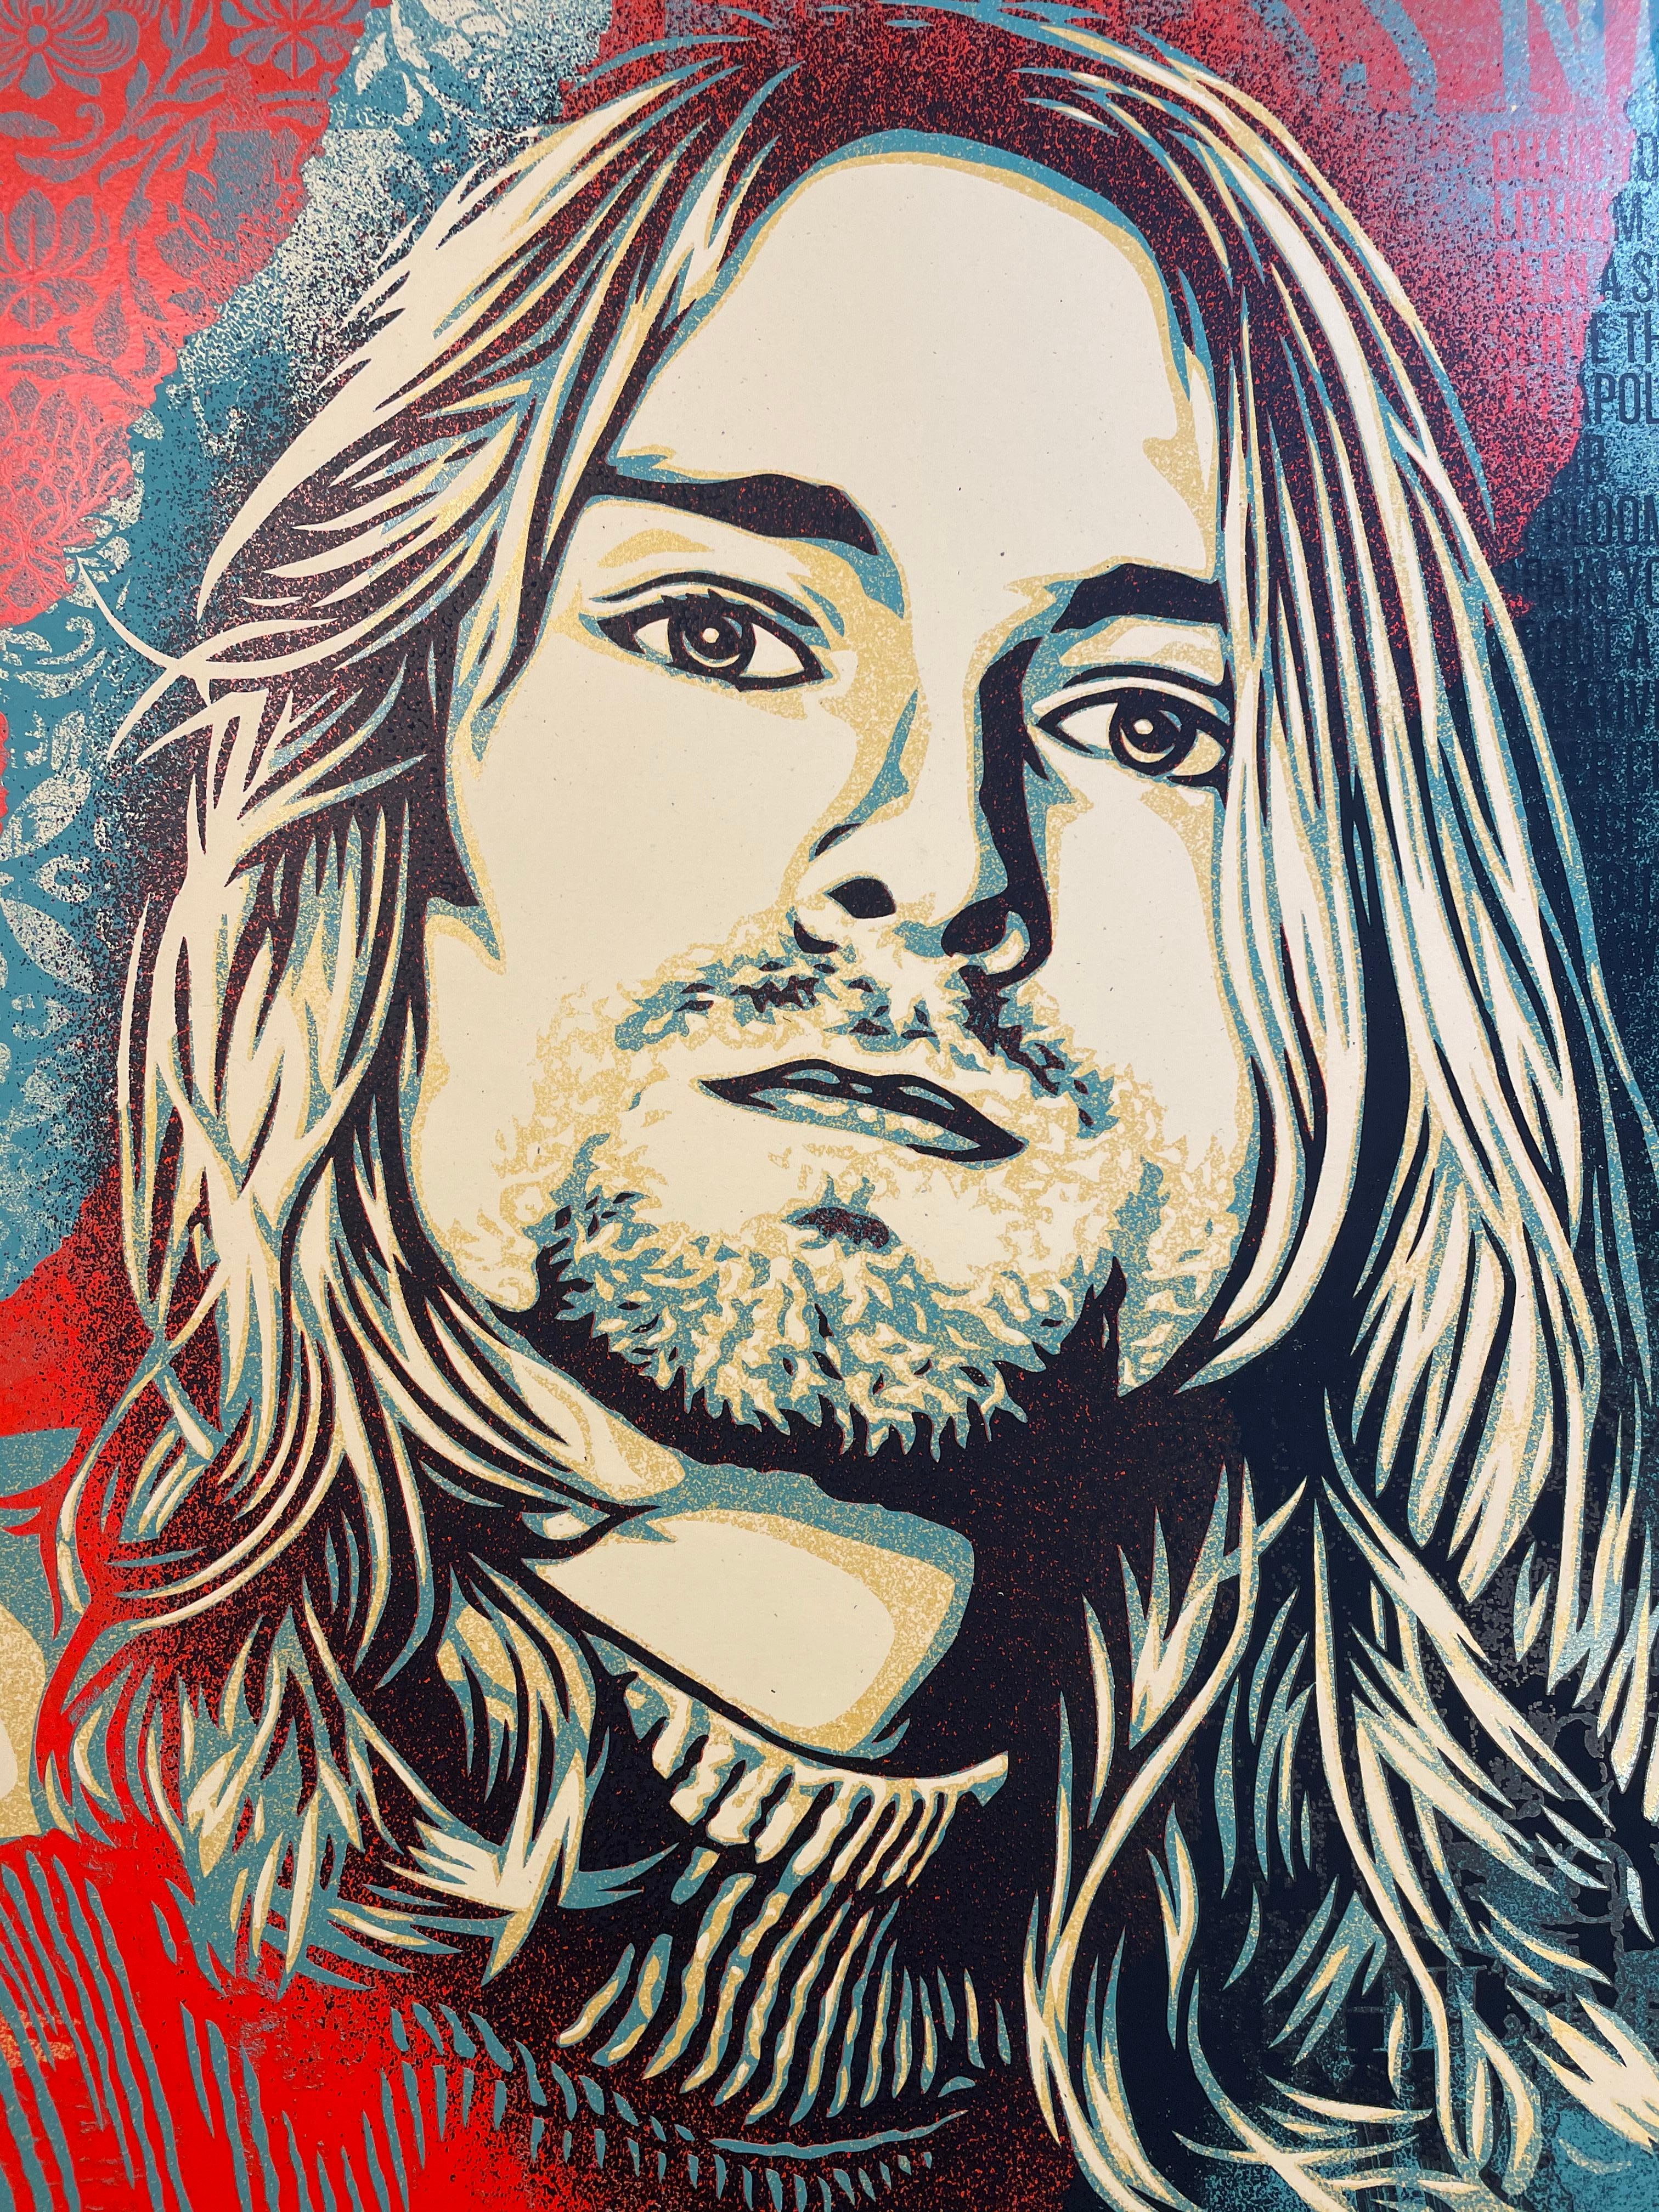 Nirvana Kurt Cobain Endless Nameless Obey Giant Signed Print Shepard Fairey Rock 2